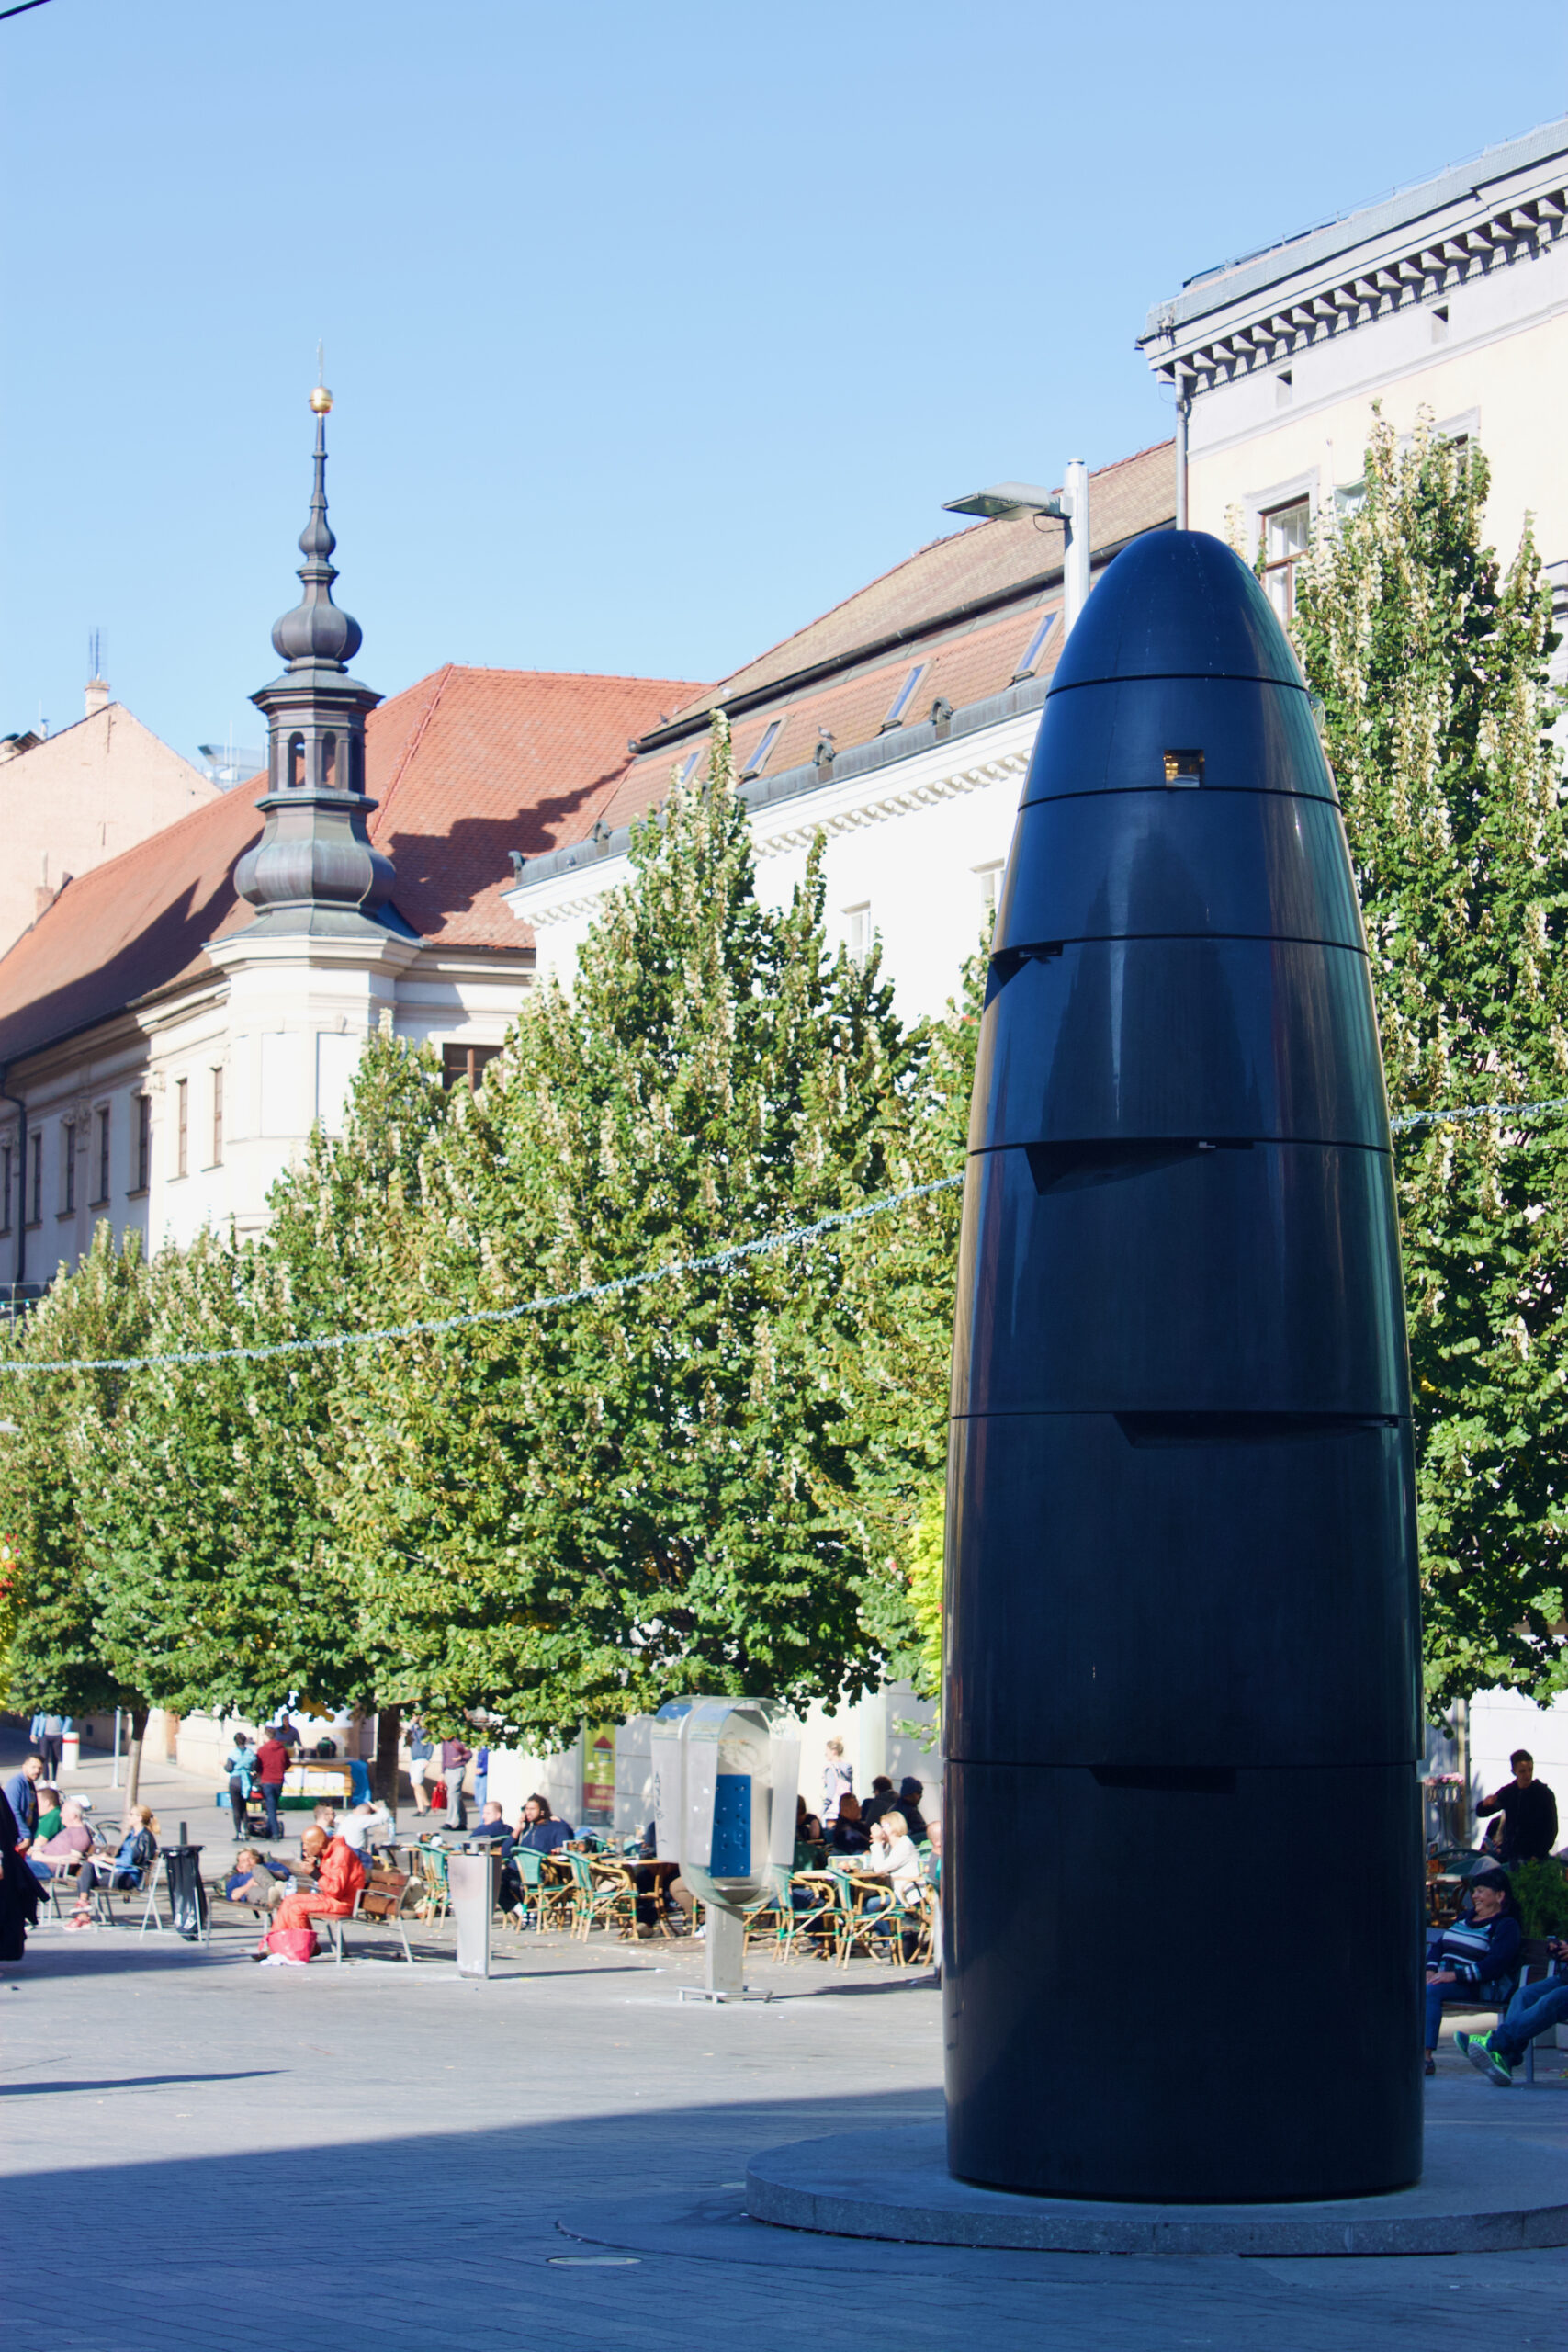 Brno Astronomical Clock - Bullet